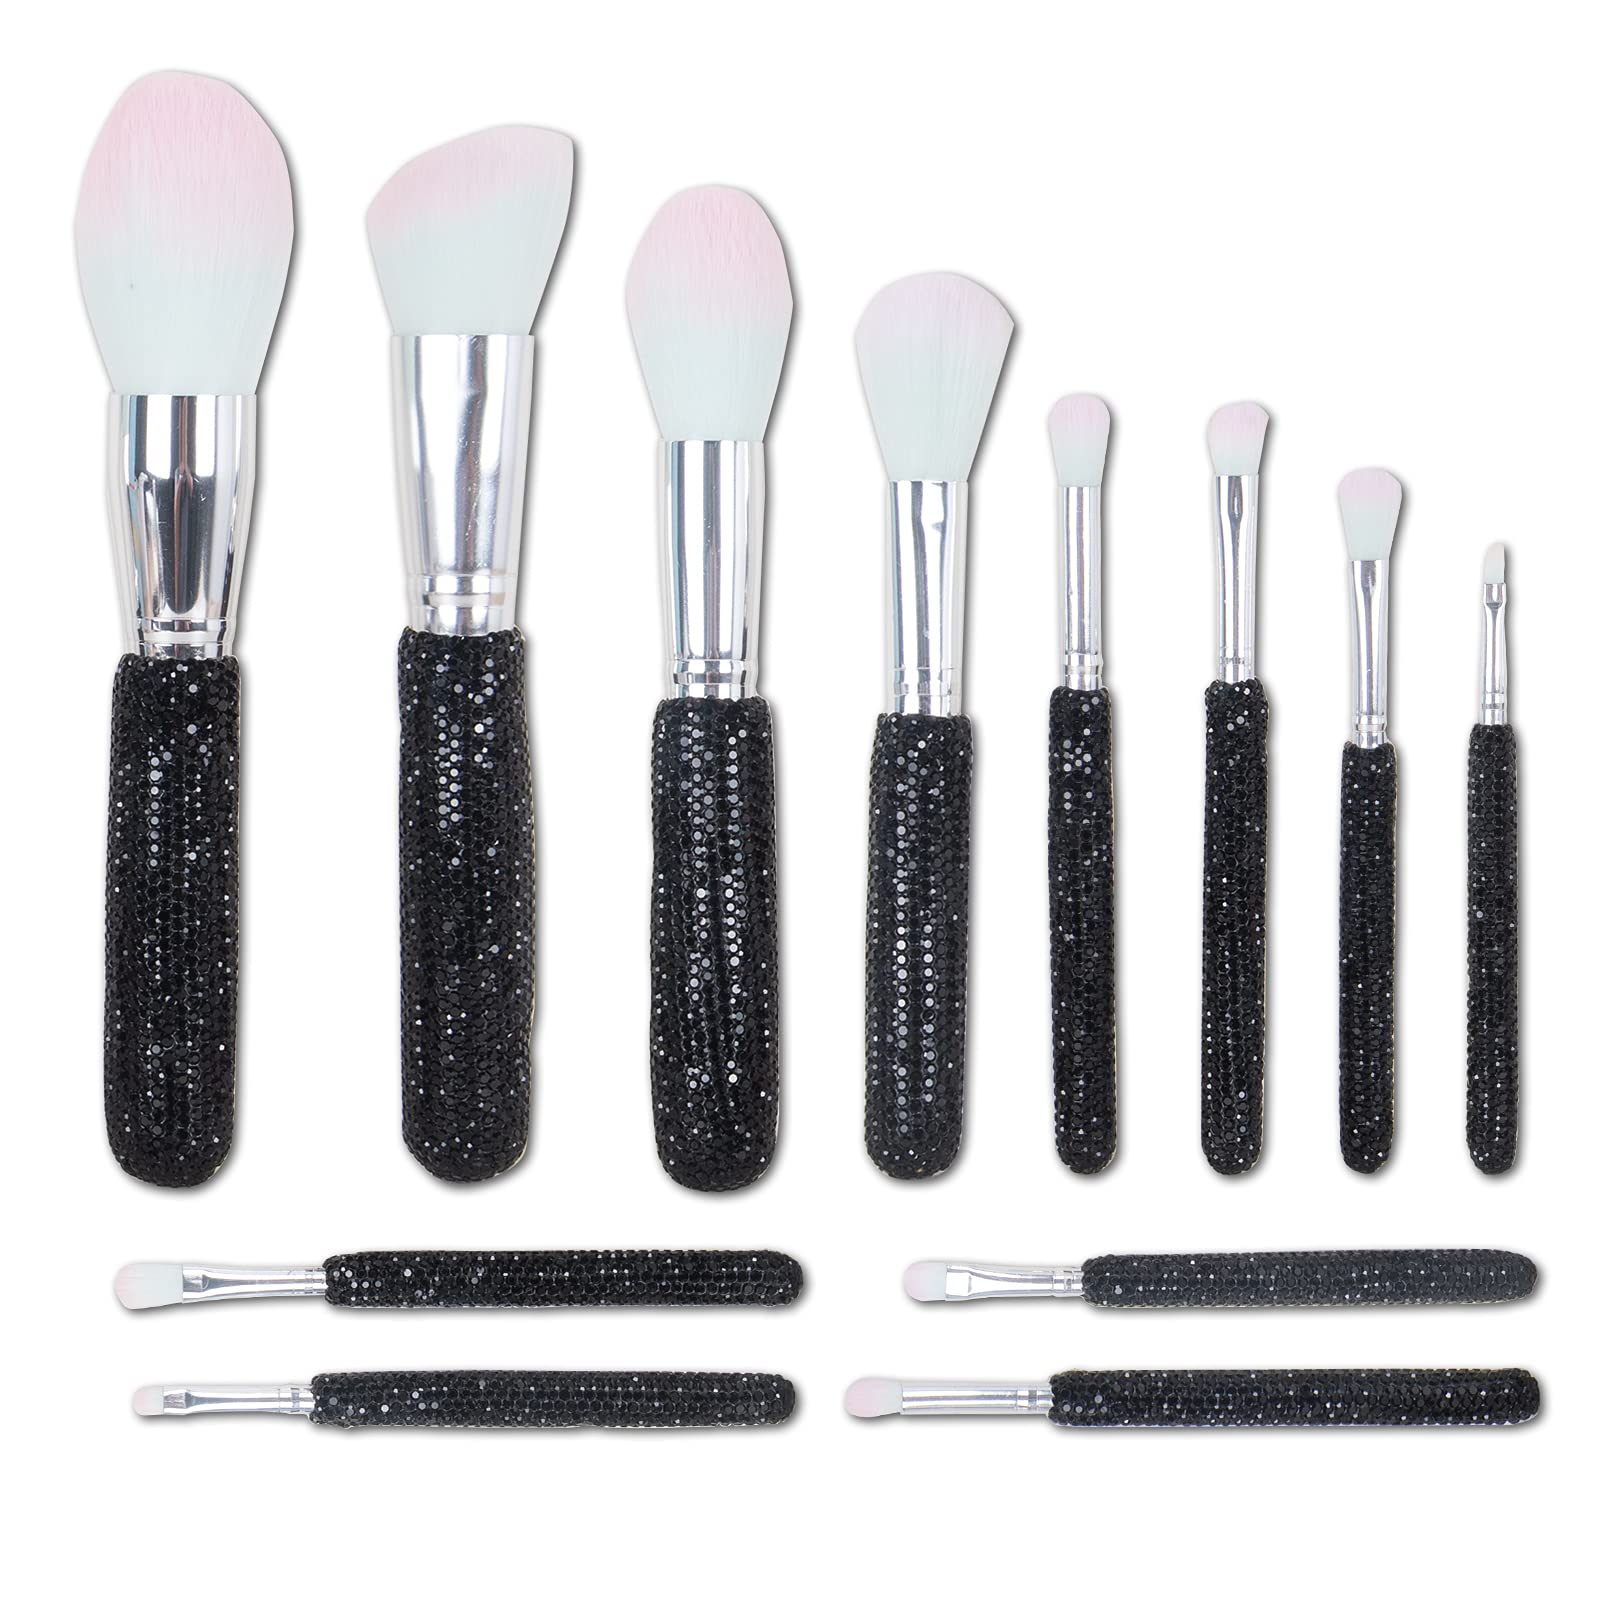 Kustomisasi Bling Crystal Makeup Brushes 12Pcs Profesional Face Kosmetik Blending Liquid Foundation Make Up Alat Kecantikan